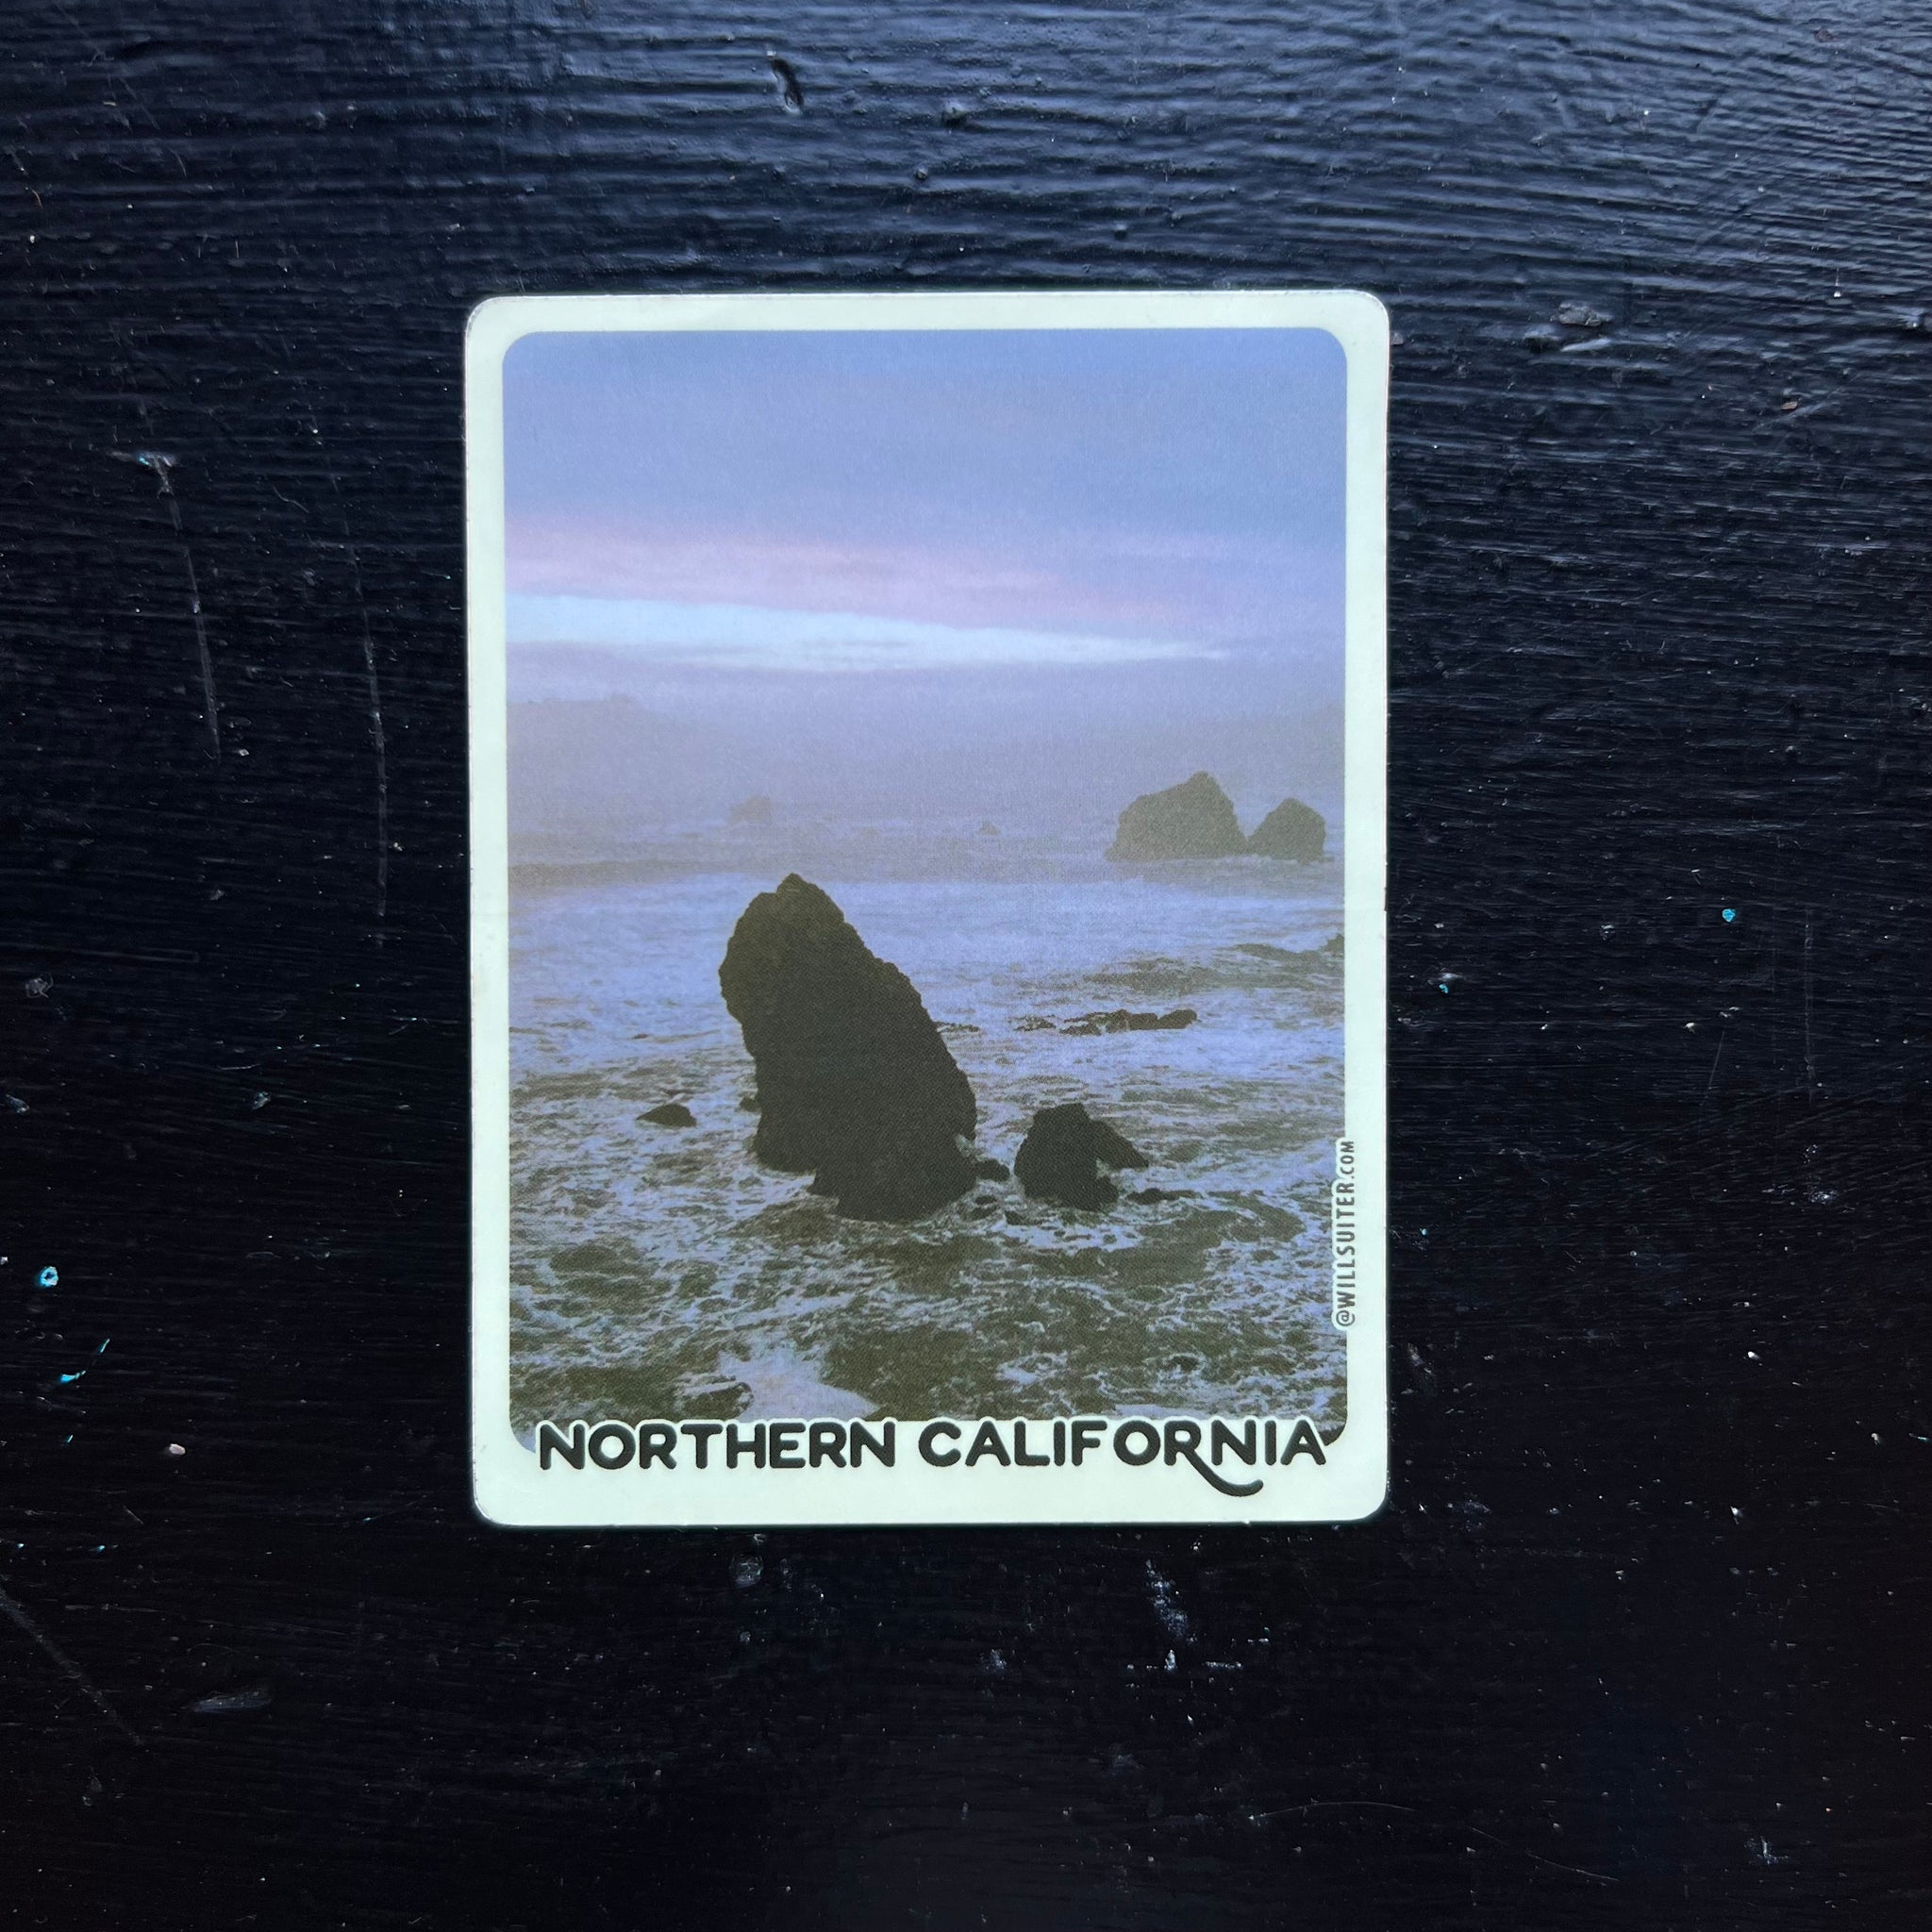 Sea Stacks - Northern California 3x4 Inch Sticker